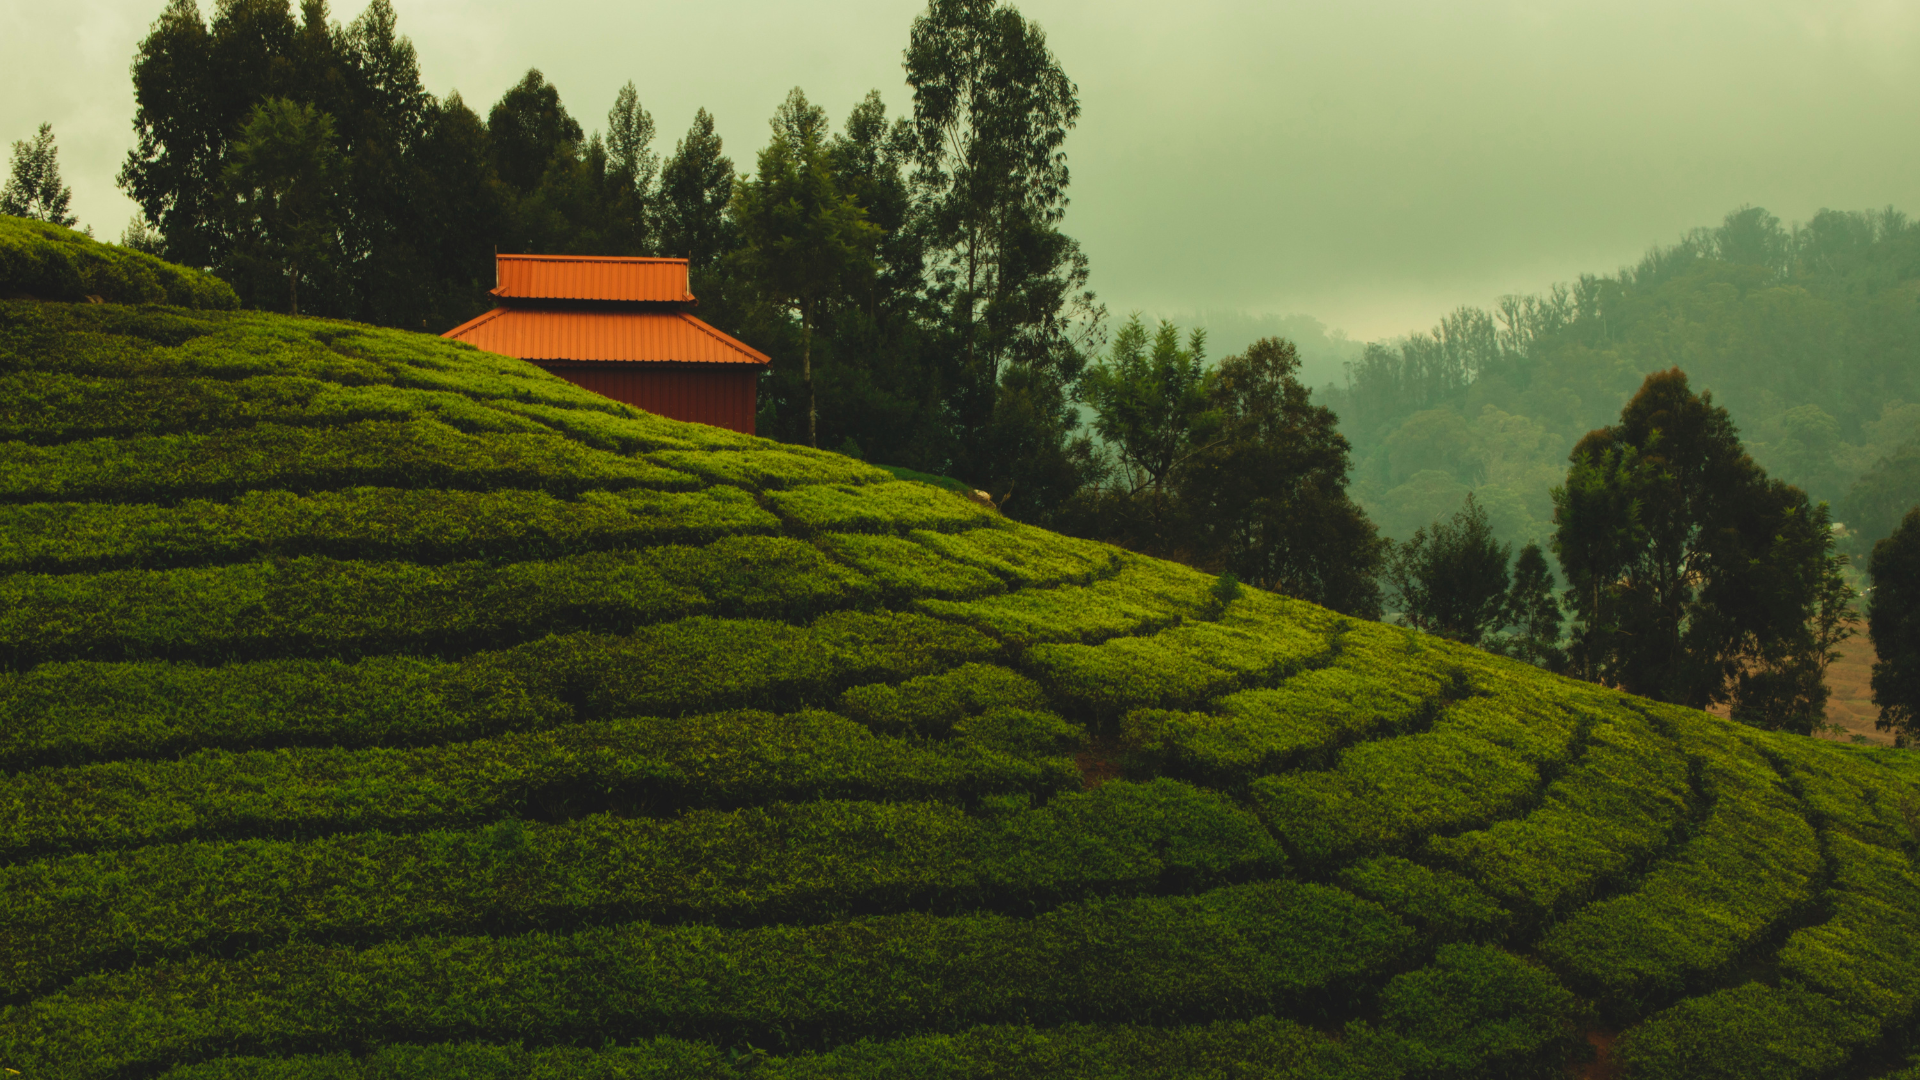 Green tea field with a terra-cotta style farm house